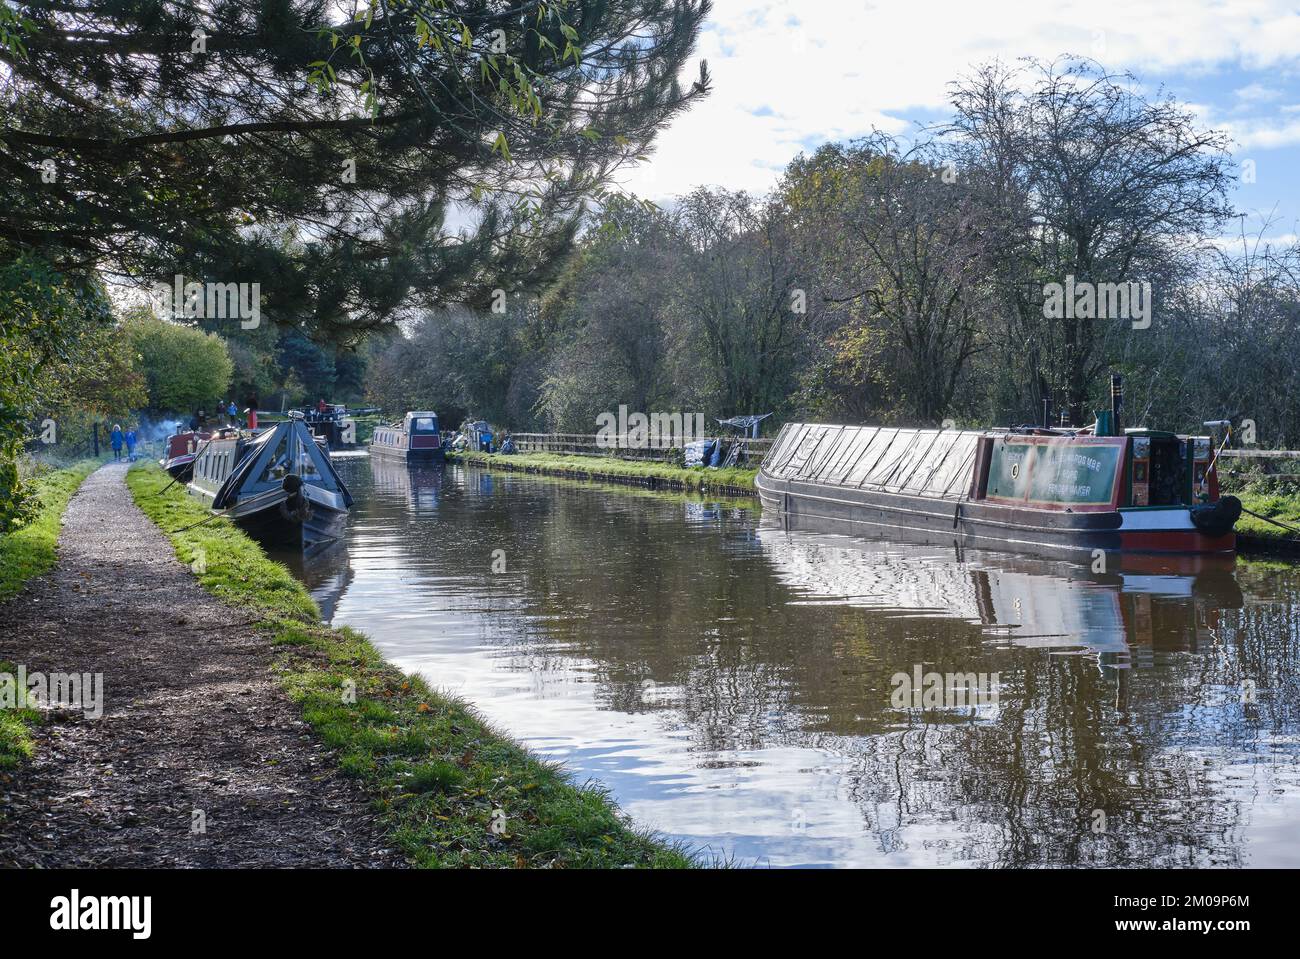 Barche strette ormeggiate sul canale Shropshire Union a Audlem, Cheshire Foto Stock